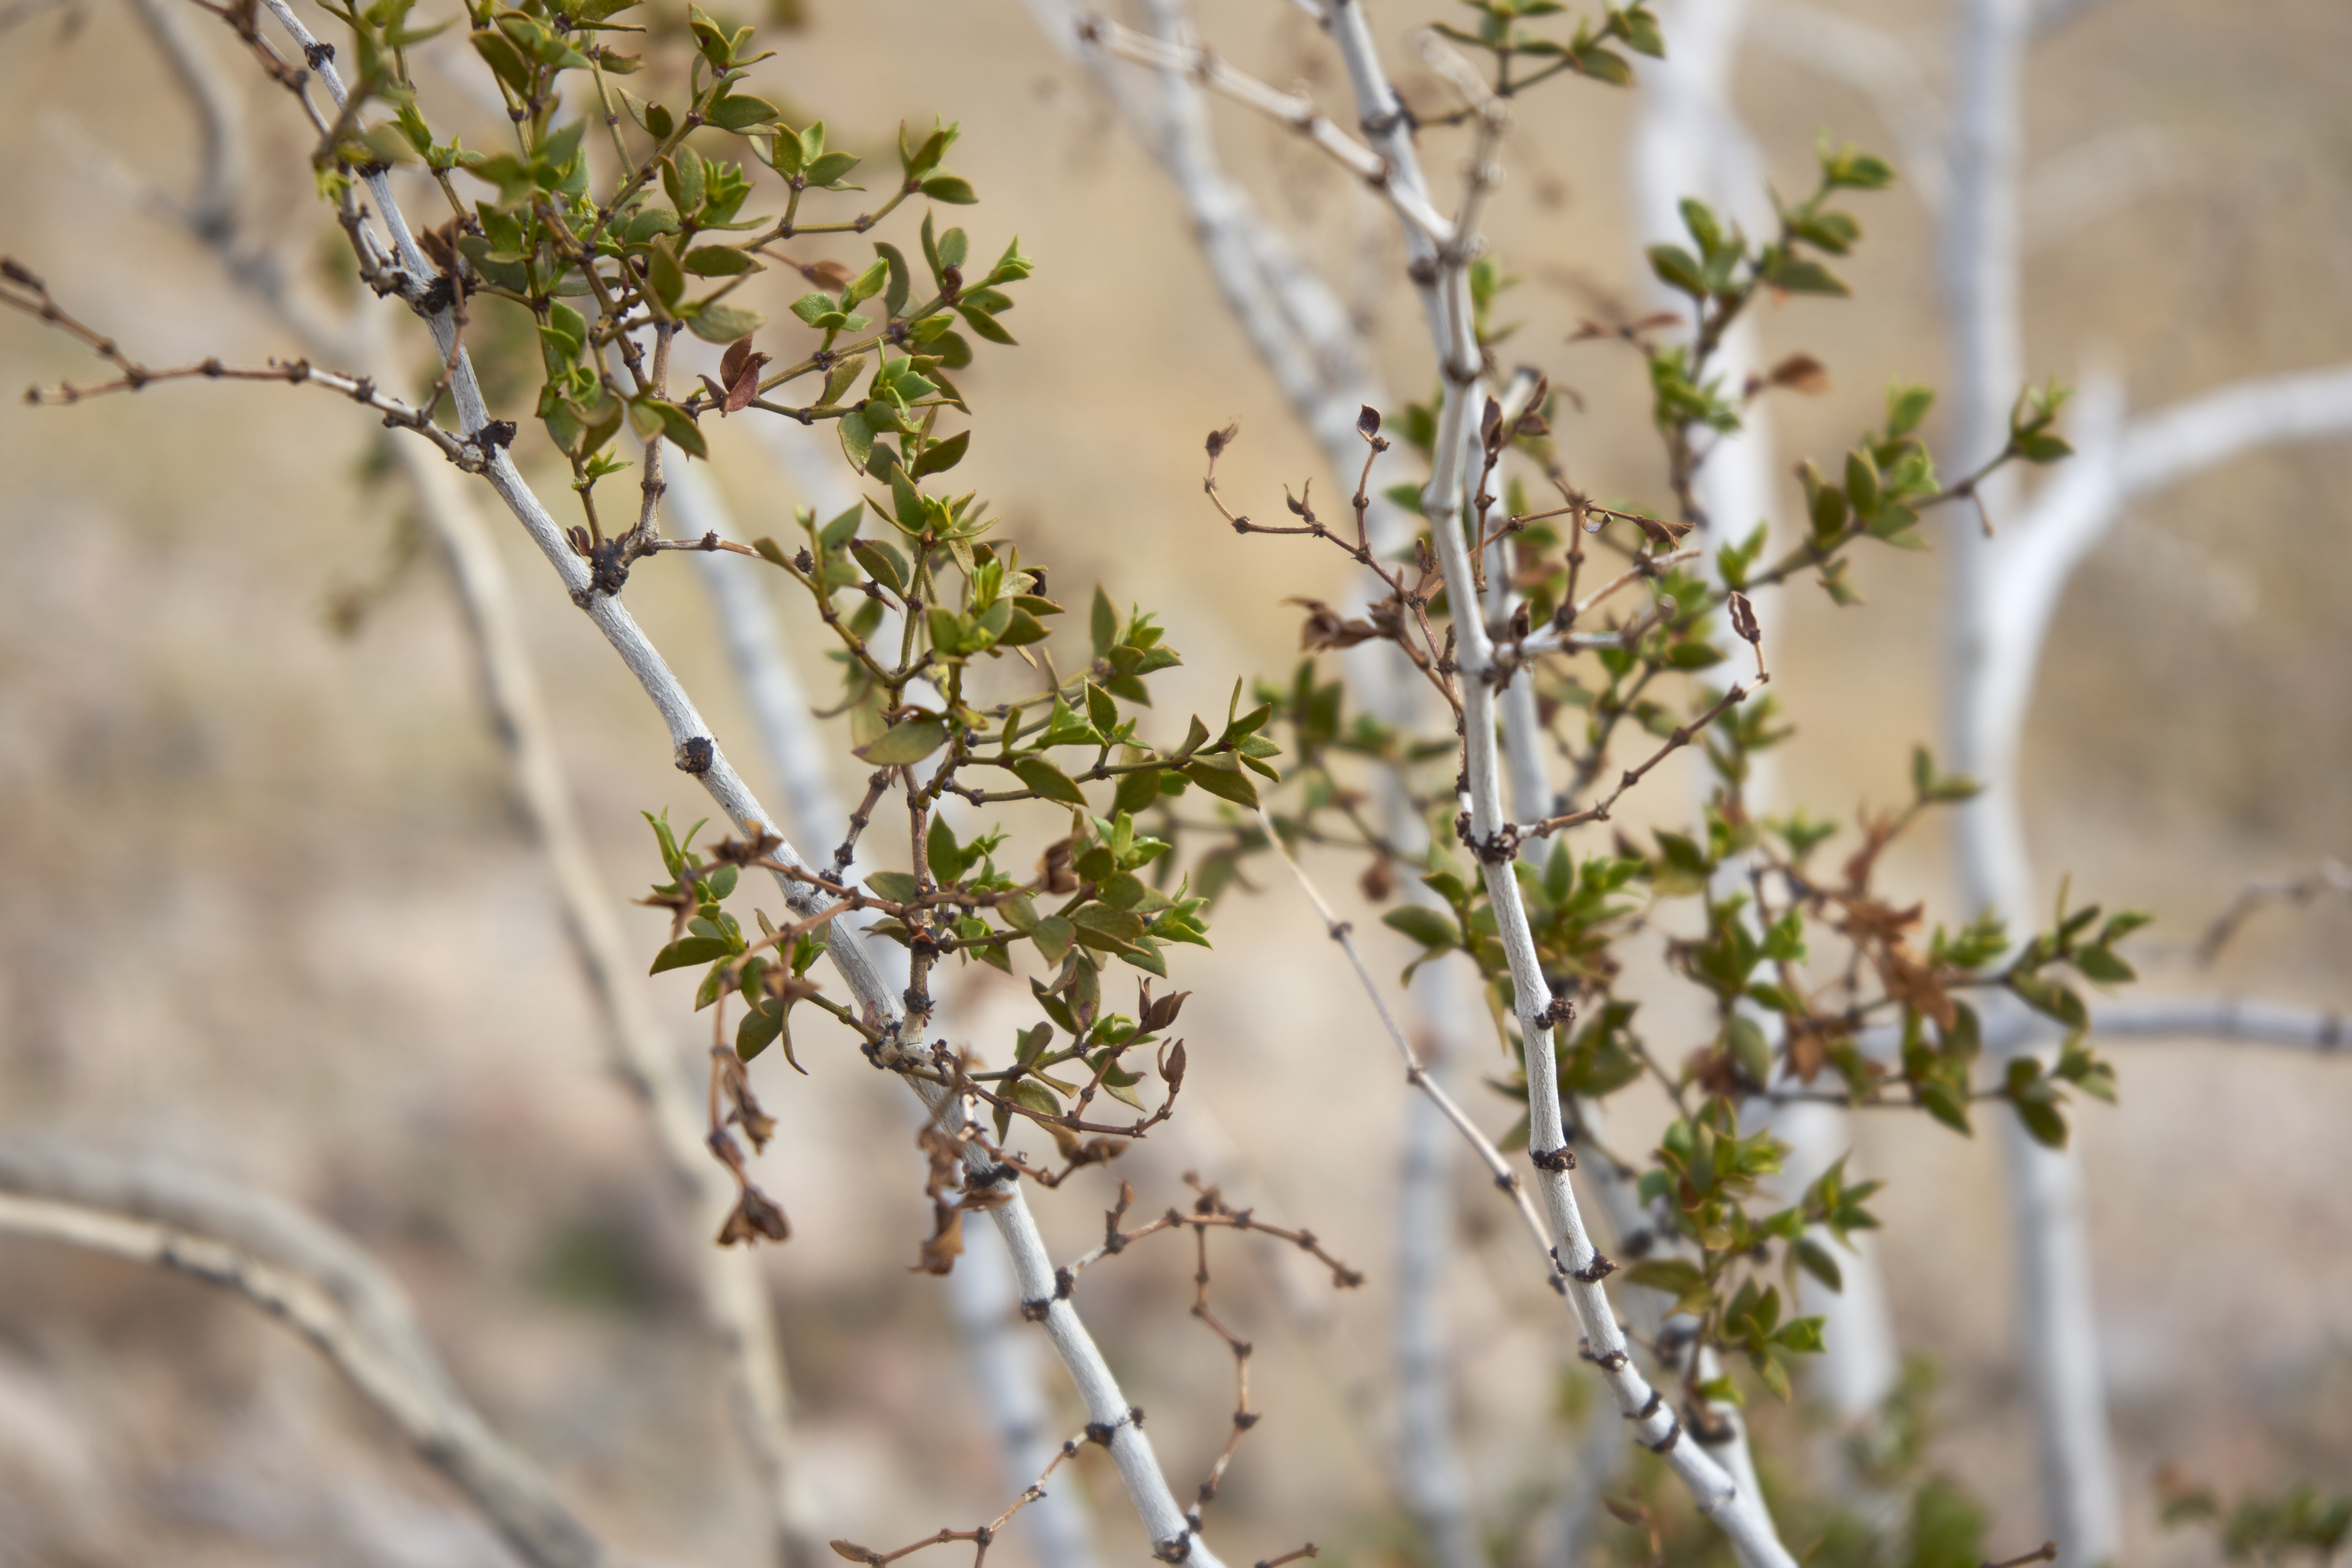 green leaves on white stems, near phoenix, arizona